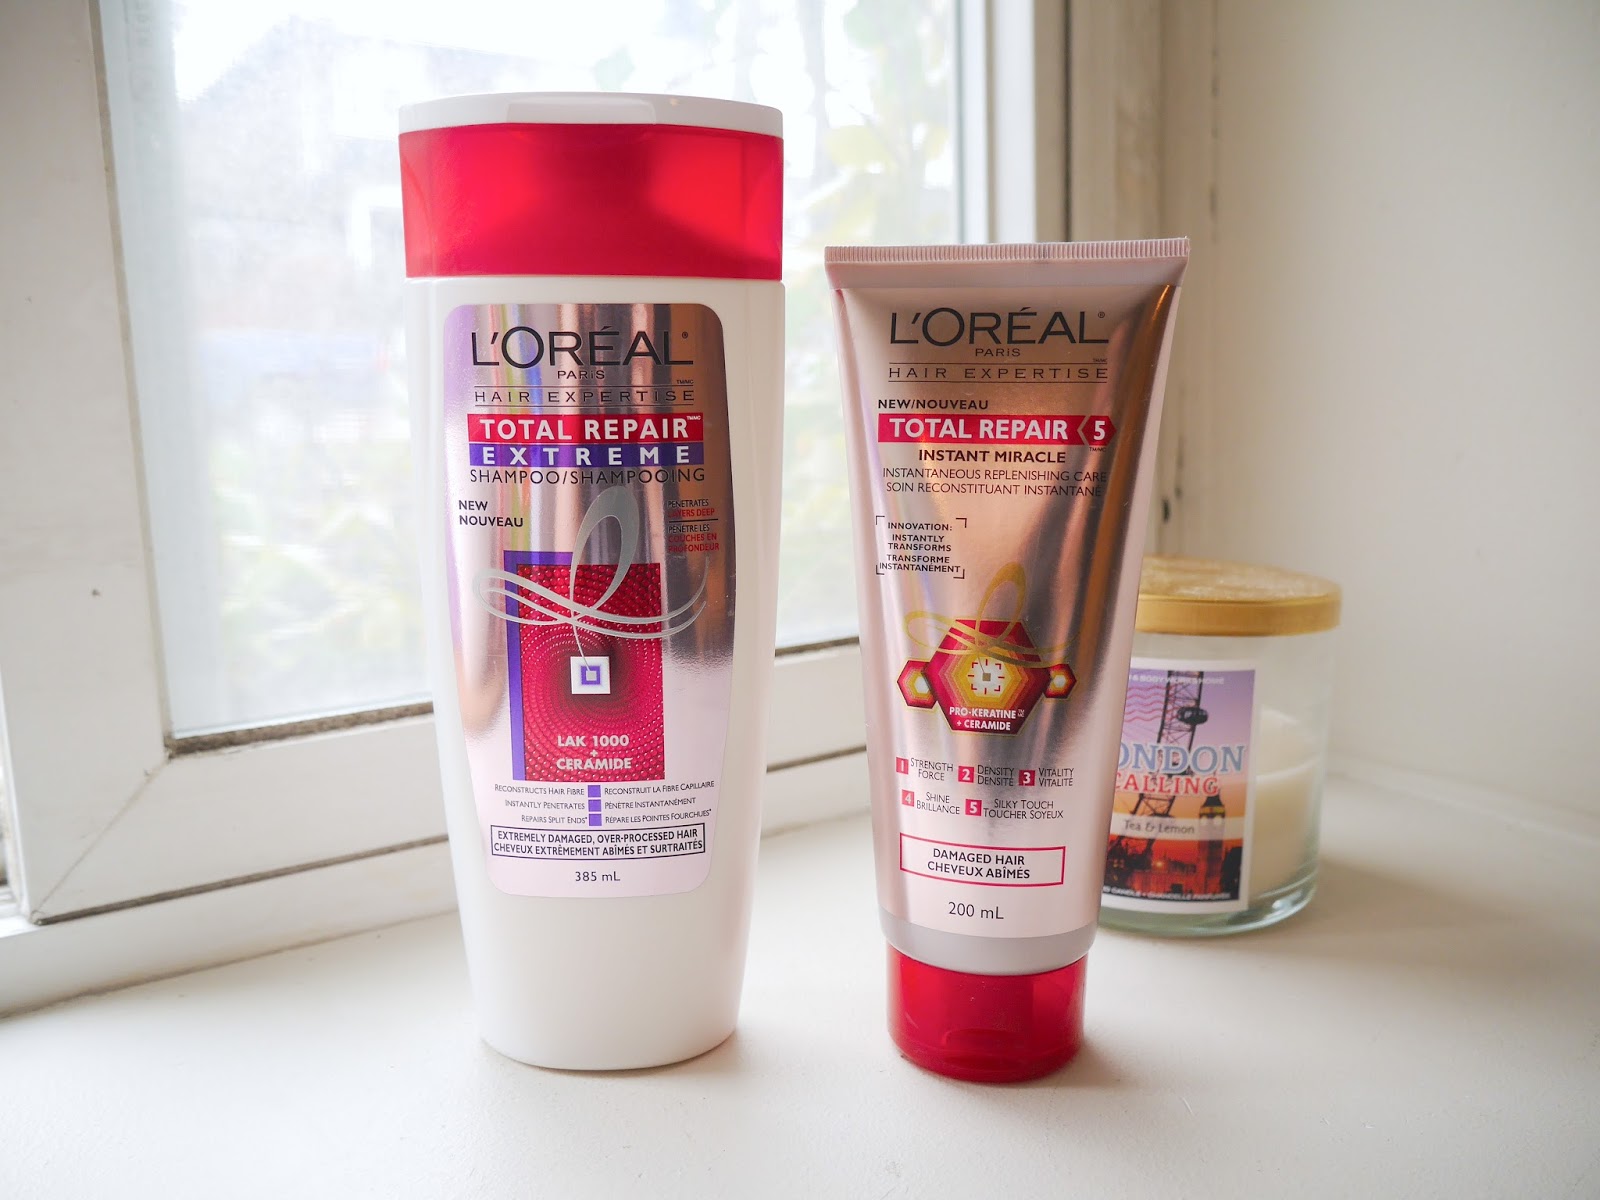 L'Oreal Total Repair Extreme Shampoo and Total Repair 5 Instant Miracle review